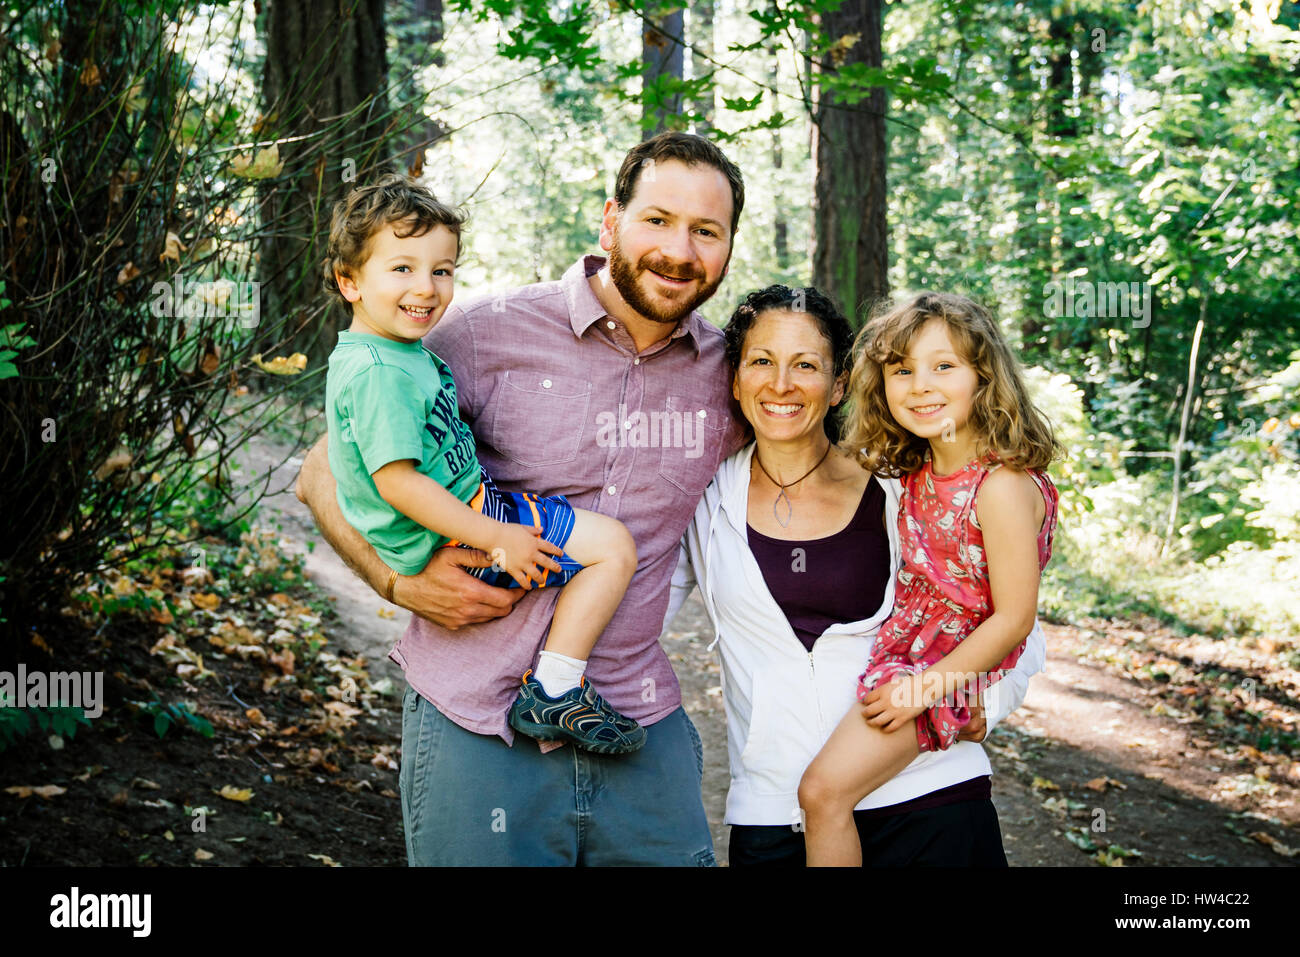 Portrait of smiling Caucasian family in park Stock Photo